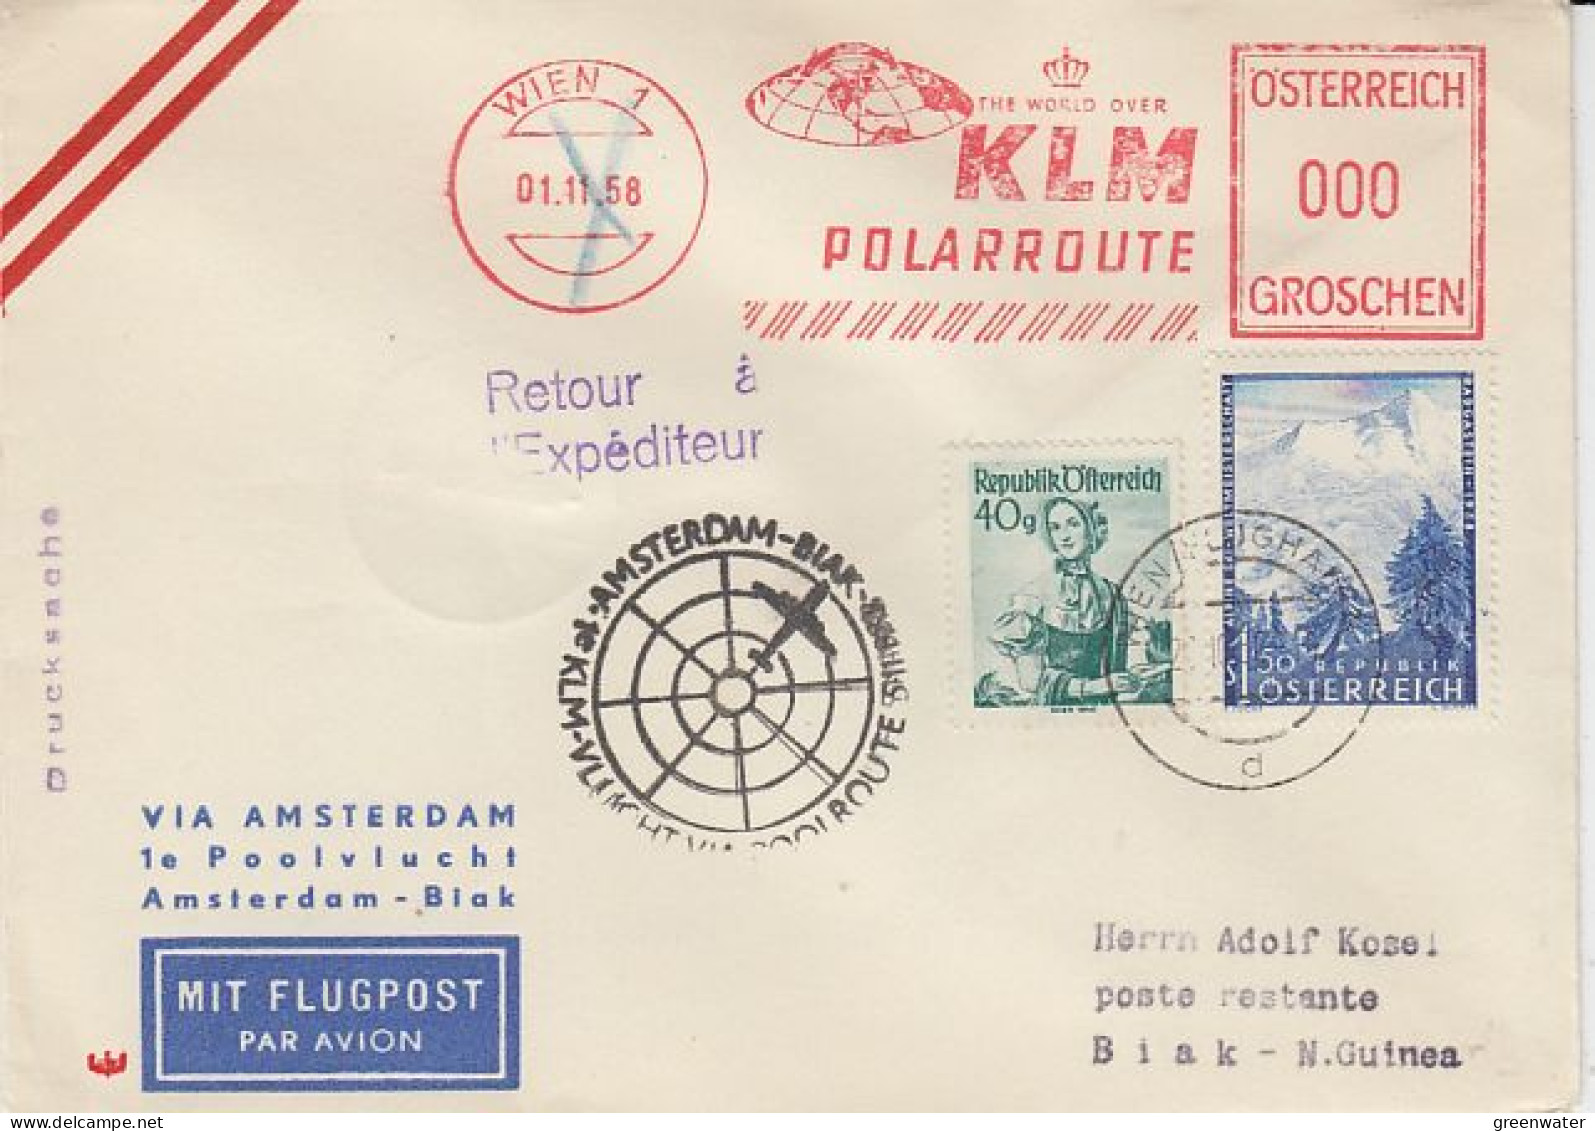 Austria 1958 KLM Polarroute 1st Flight Amsterdam- Biak New Guinea Cover (59621) - Covers & Documents